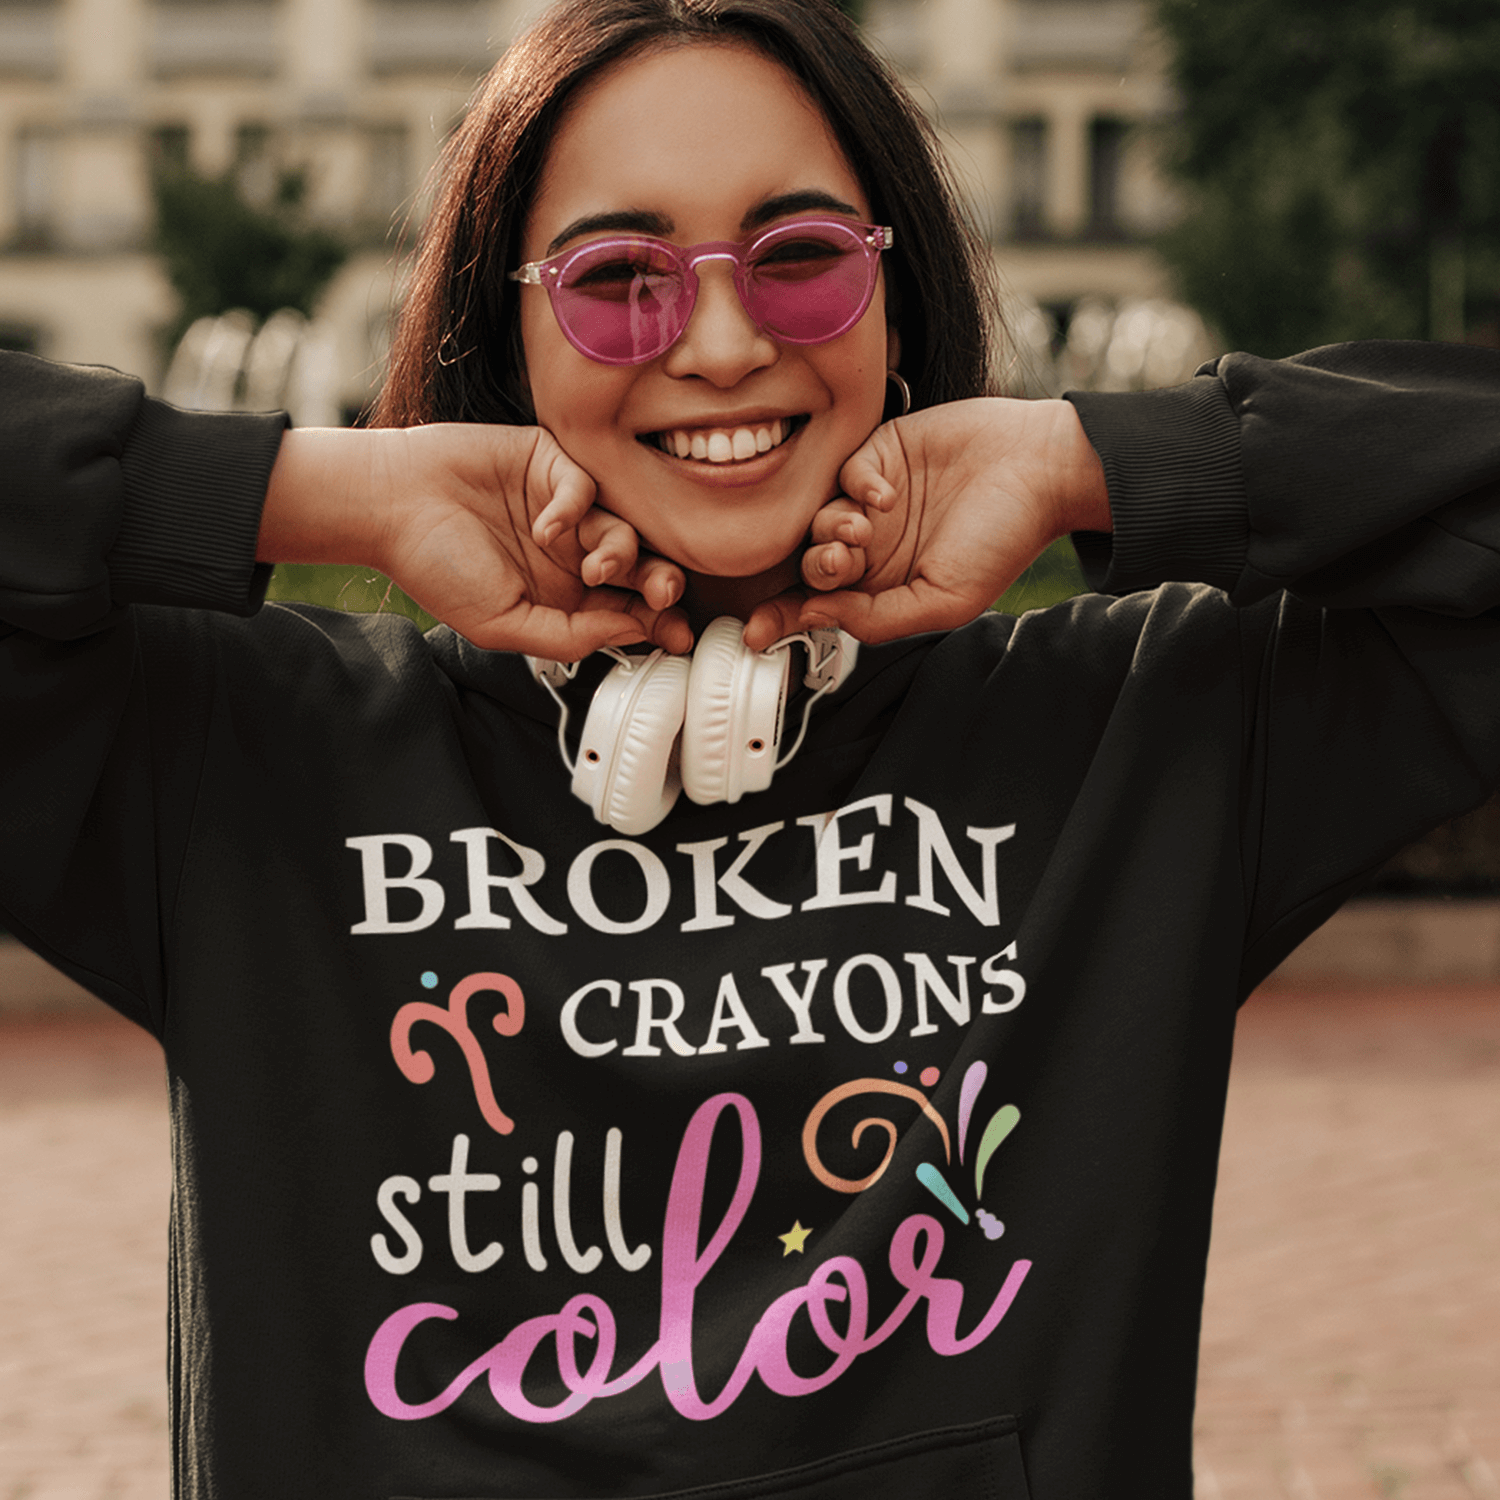 Broken Crayons Still Color Sweatshirt & Hoodie - Lelemoon